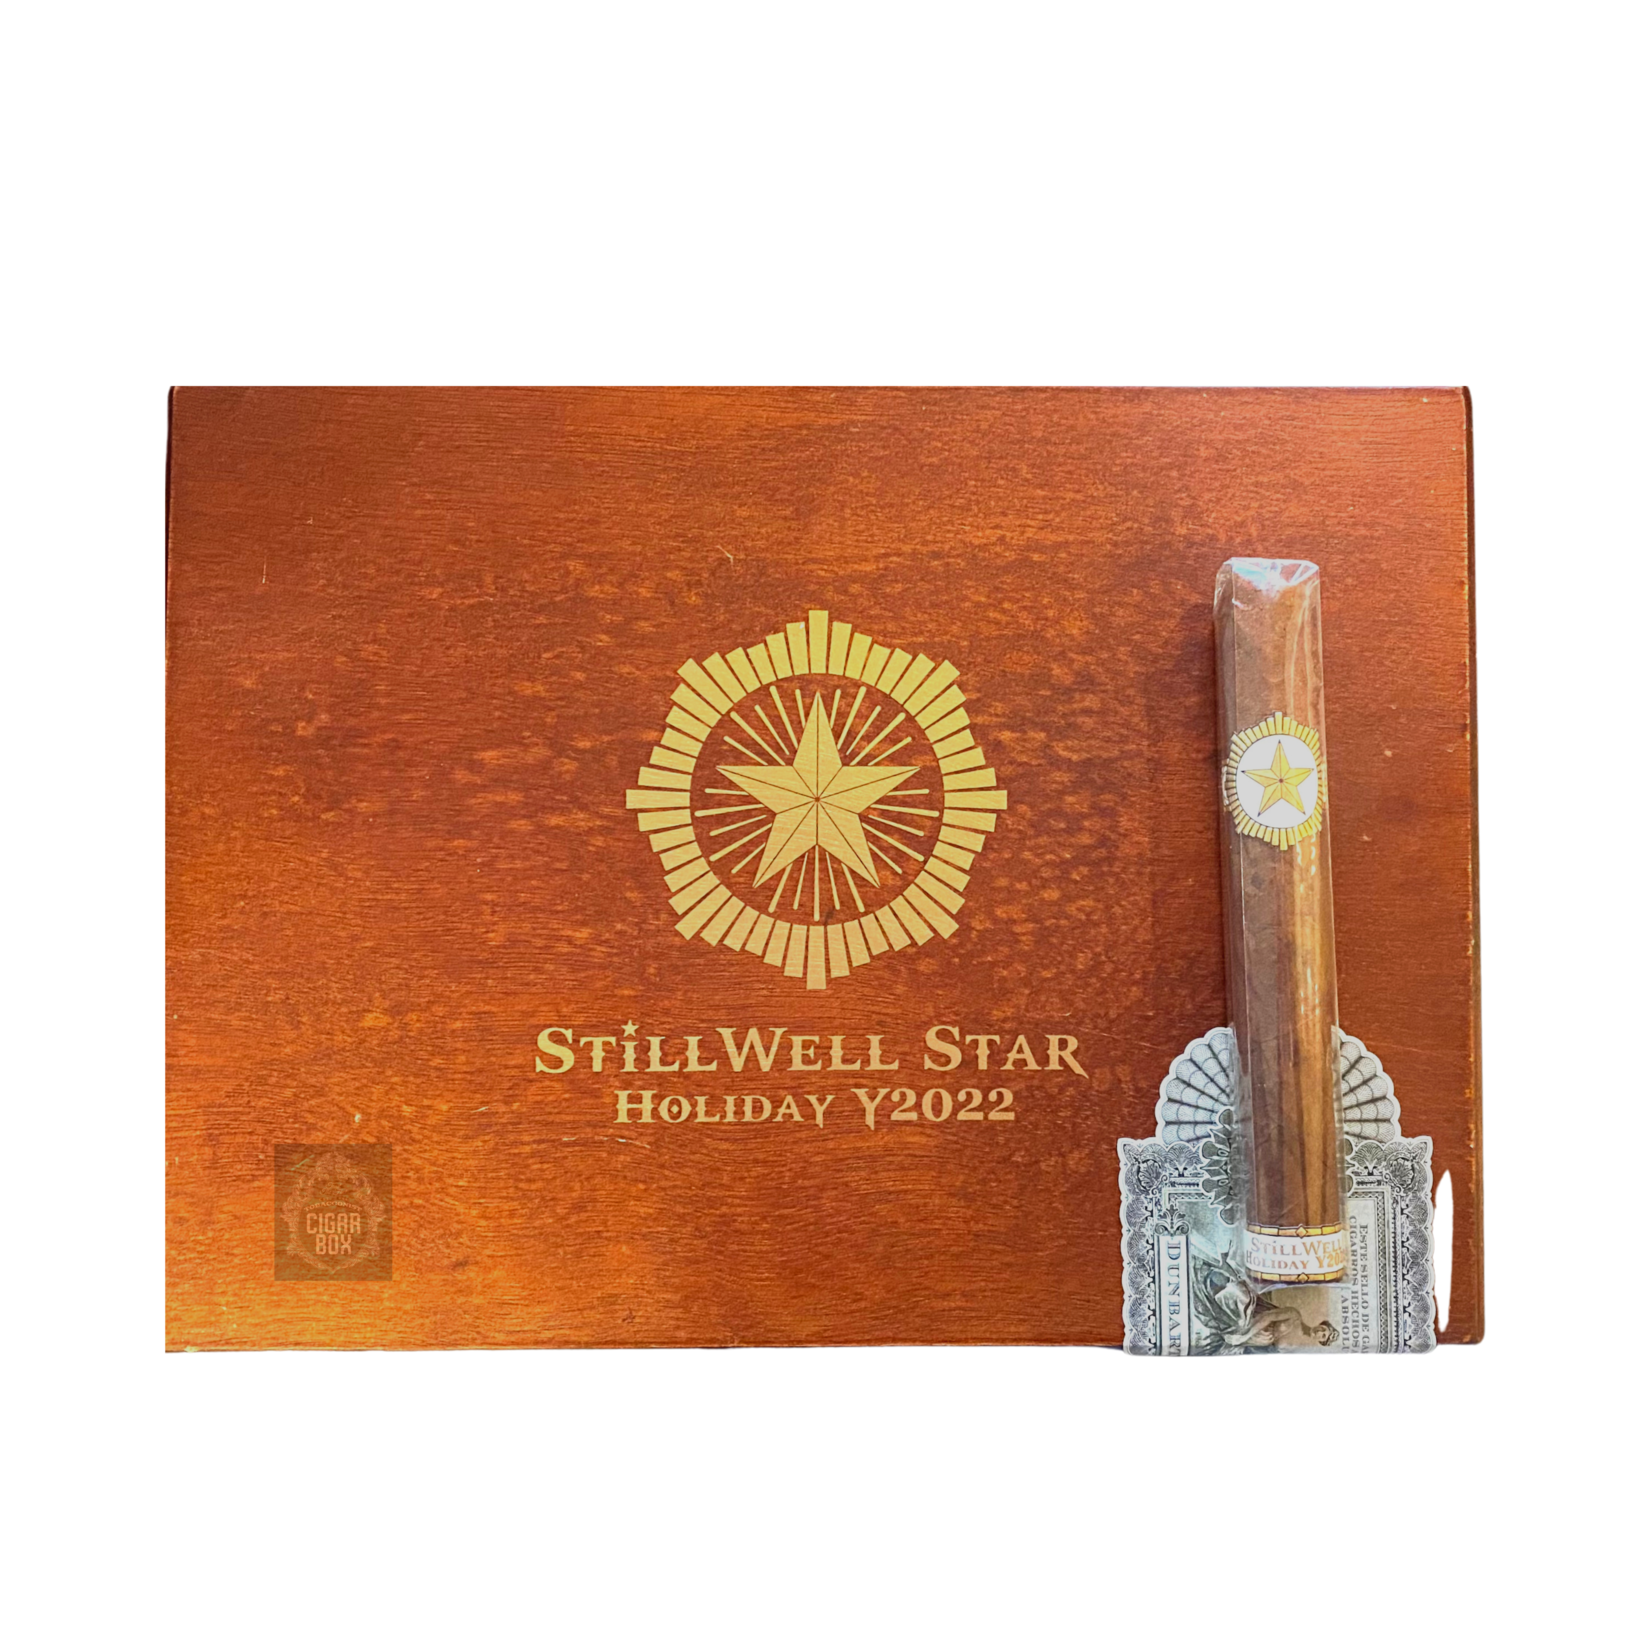 Stillwell Star StillWell Star Holiday 2022